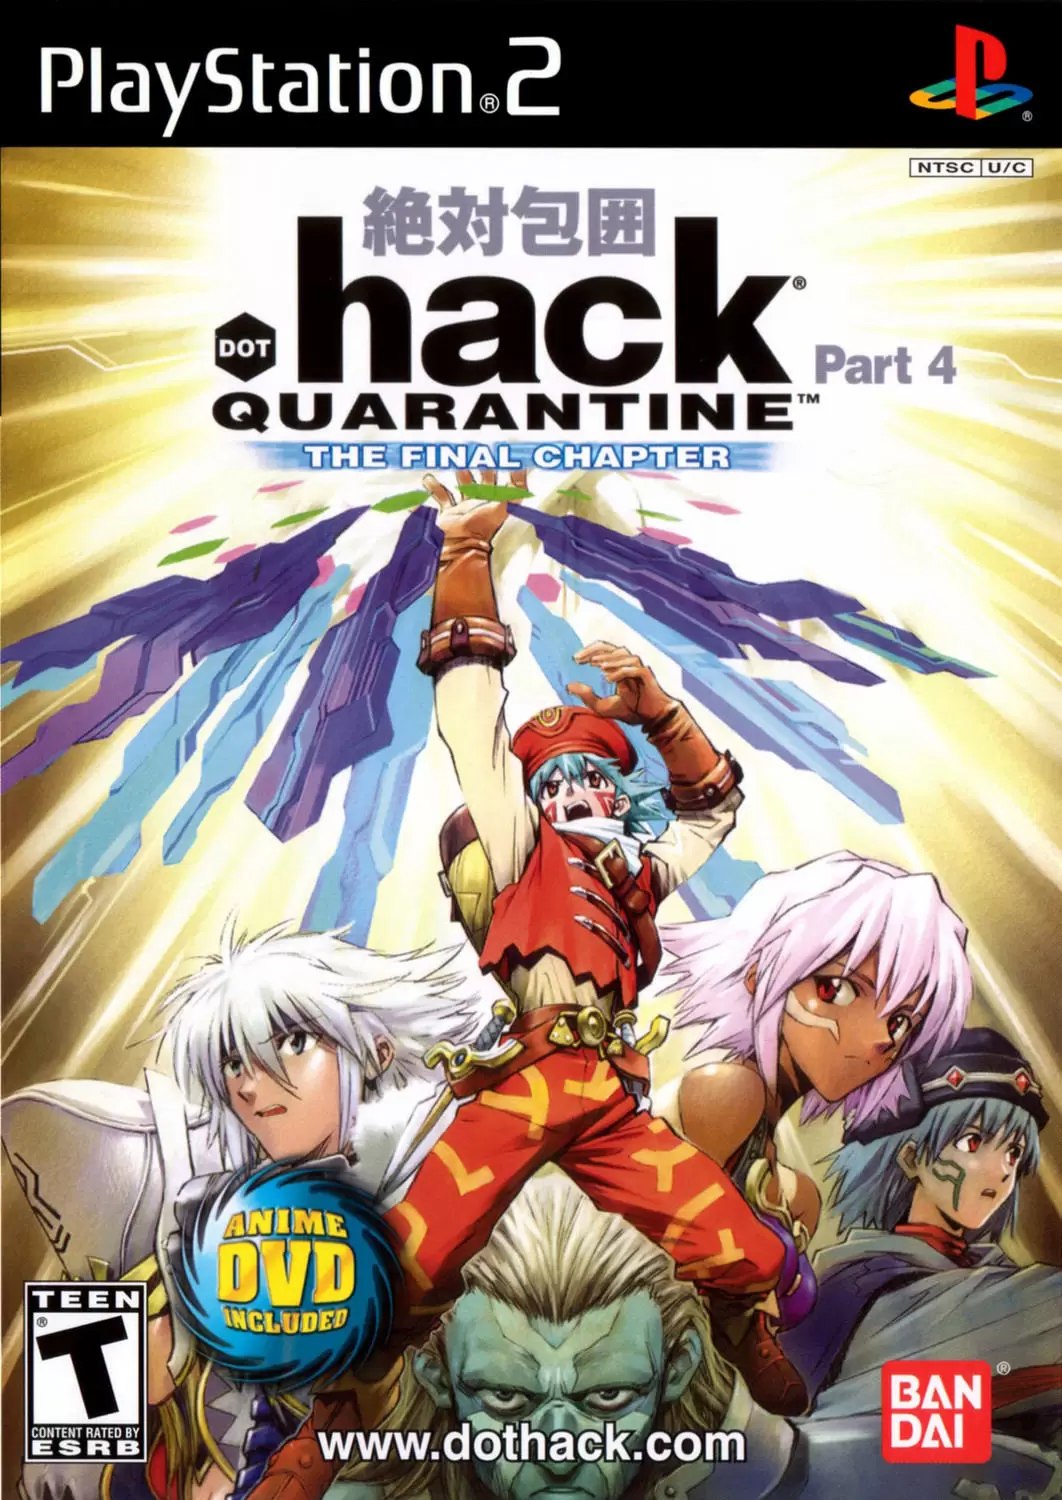 PS2 Games - .hack//Quarantine